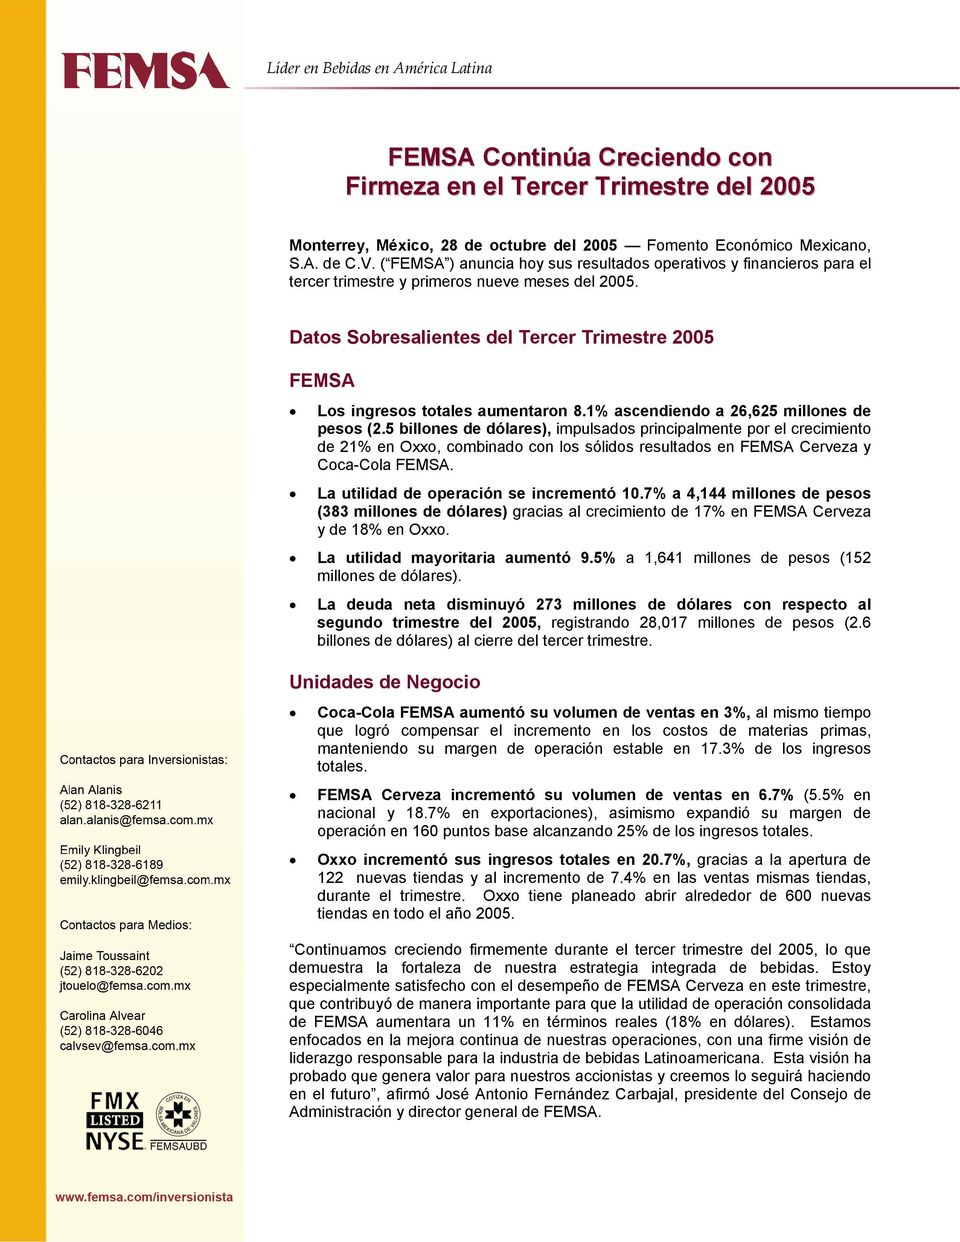 Datos Sobresalientes del Tercer Trimestre 2005 FEMSA Los ingresos totales aumentaron 8.1% ascendiendo a 26,625 millones de pesos (2.